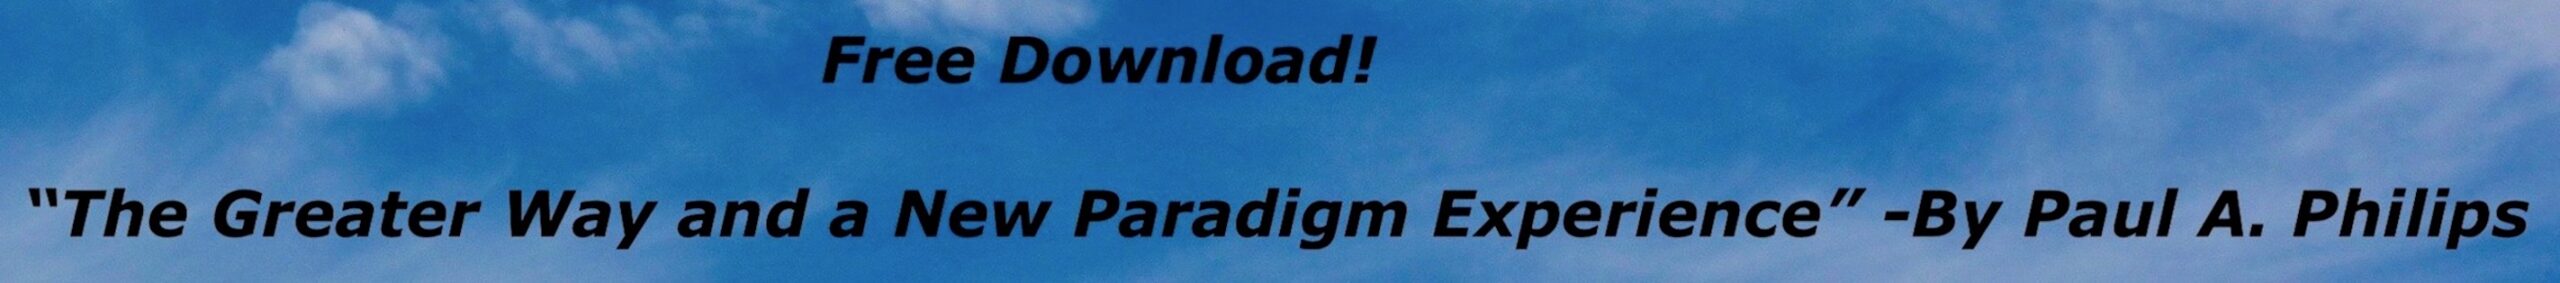 iNewParadigm - Free Downloads